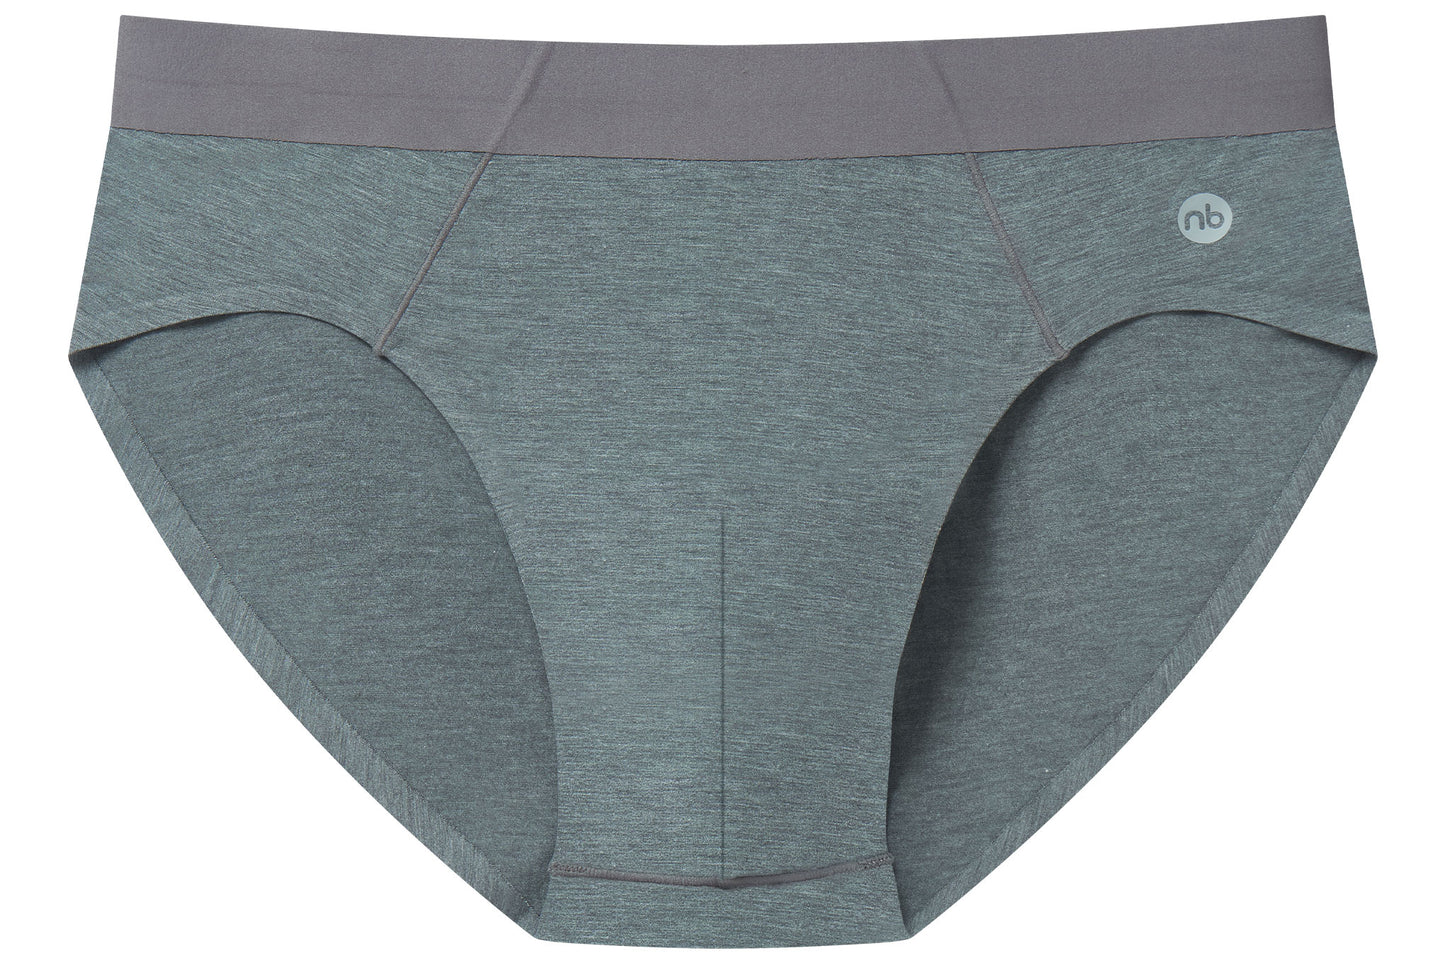 BAMBOO COOL Men's Underwear Breathable,Premium Comfort Soft Boxer  Briefs,Bamboo Underwear for Men,4 Pack